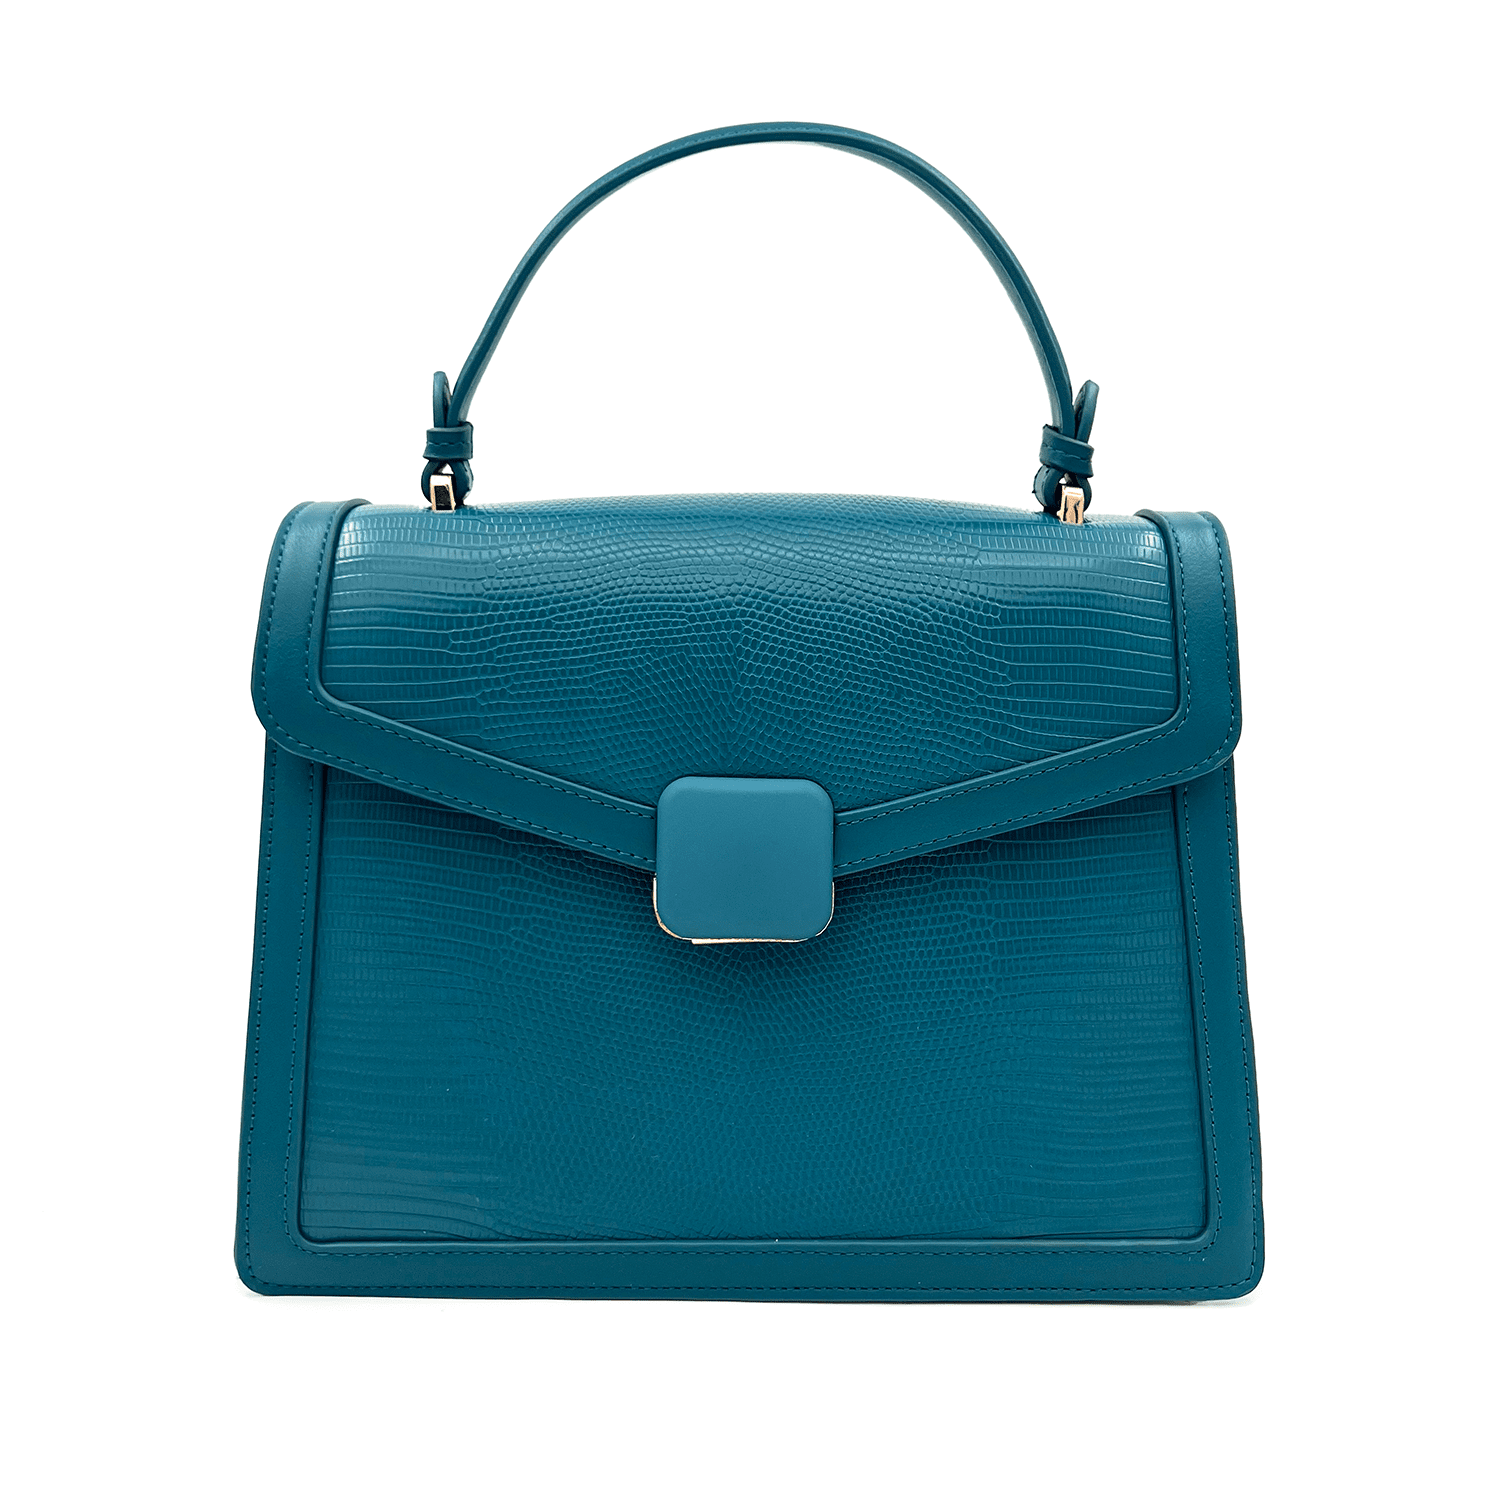 Diana & Co - Луксозна дамска чанта - синя